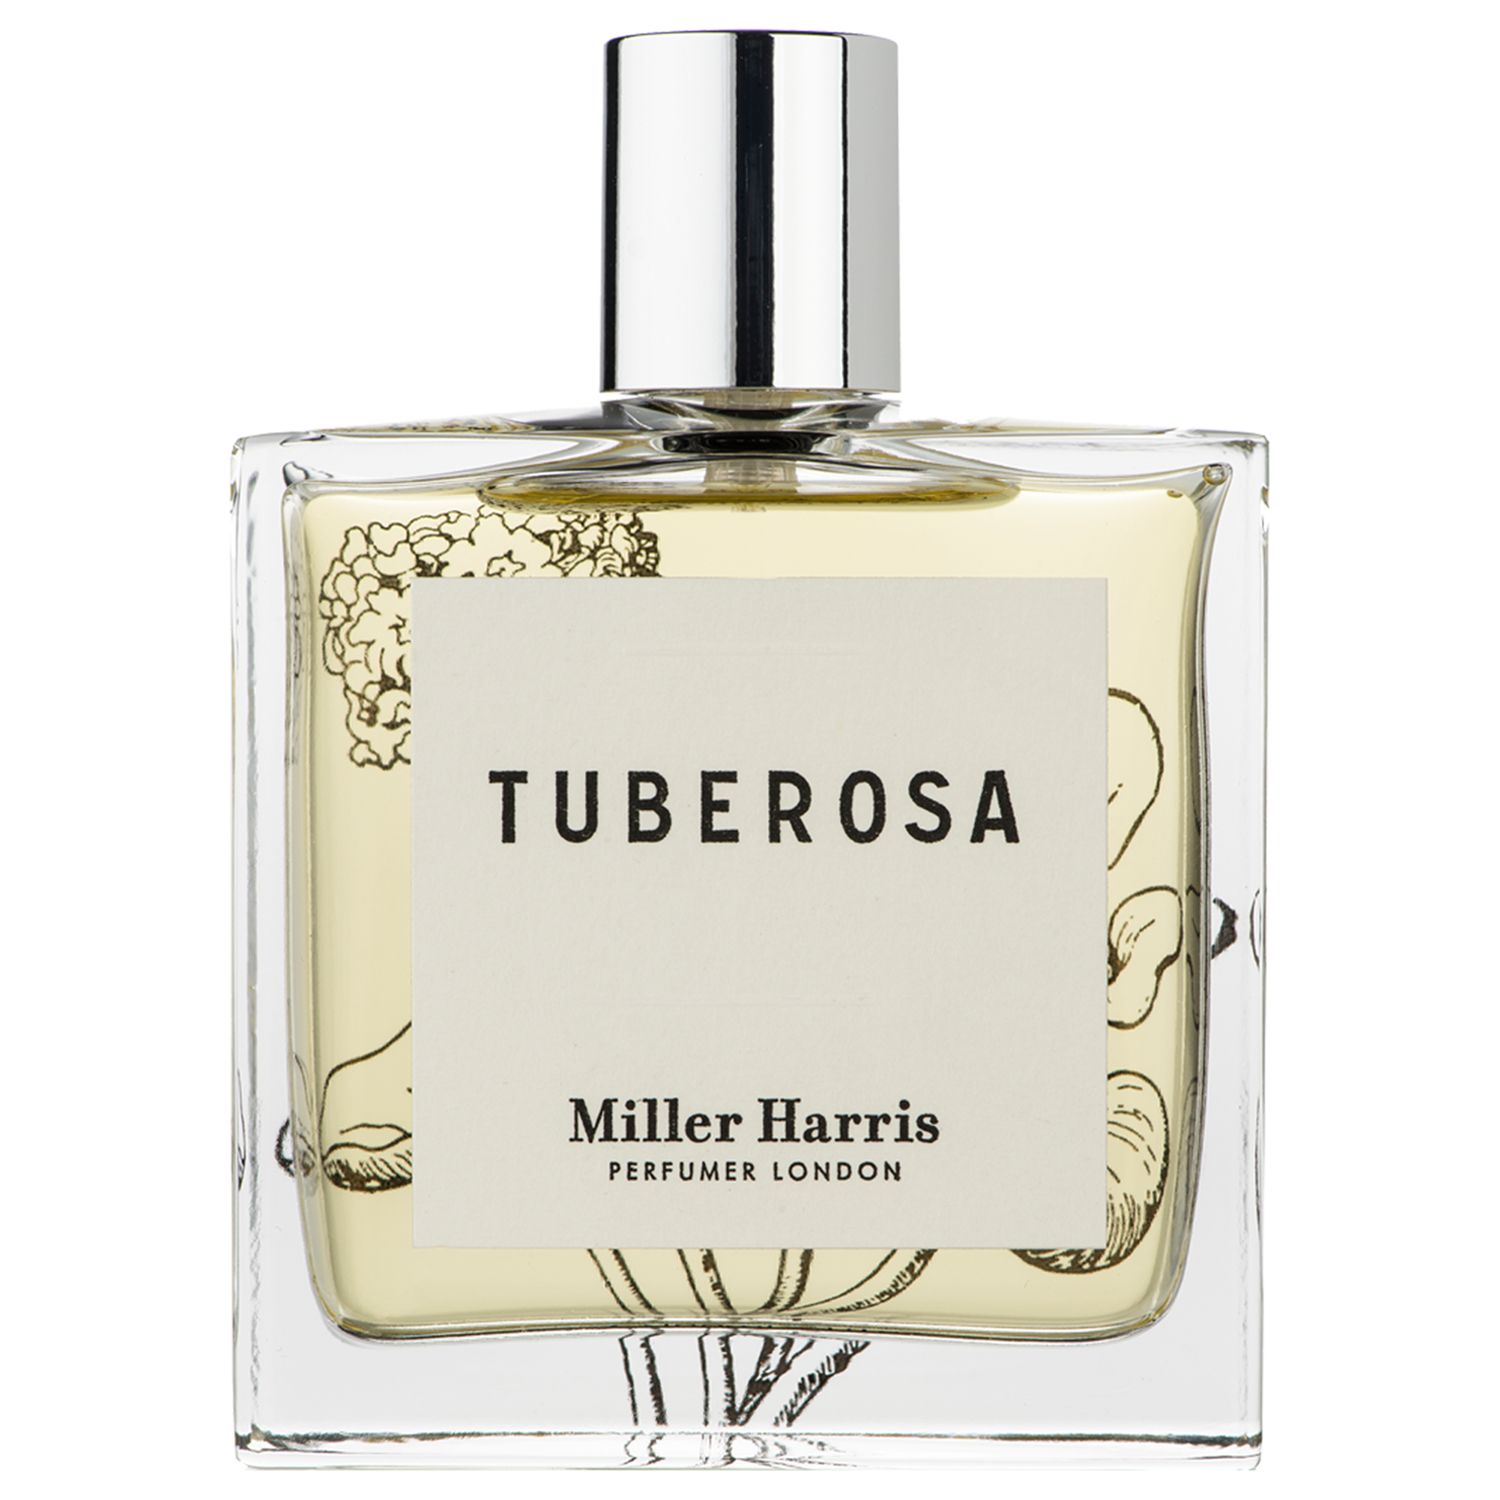 Miller Harris Perfumer's Library Tuberosa Eau de Parfum, 100ml at John